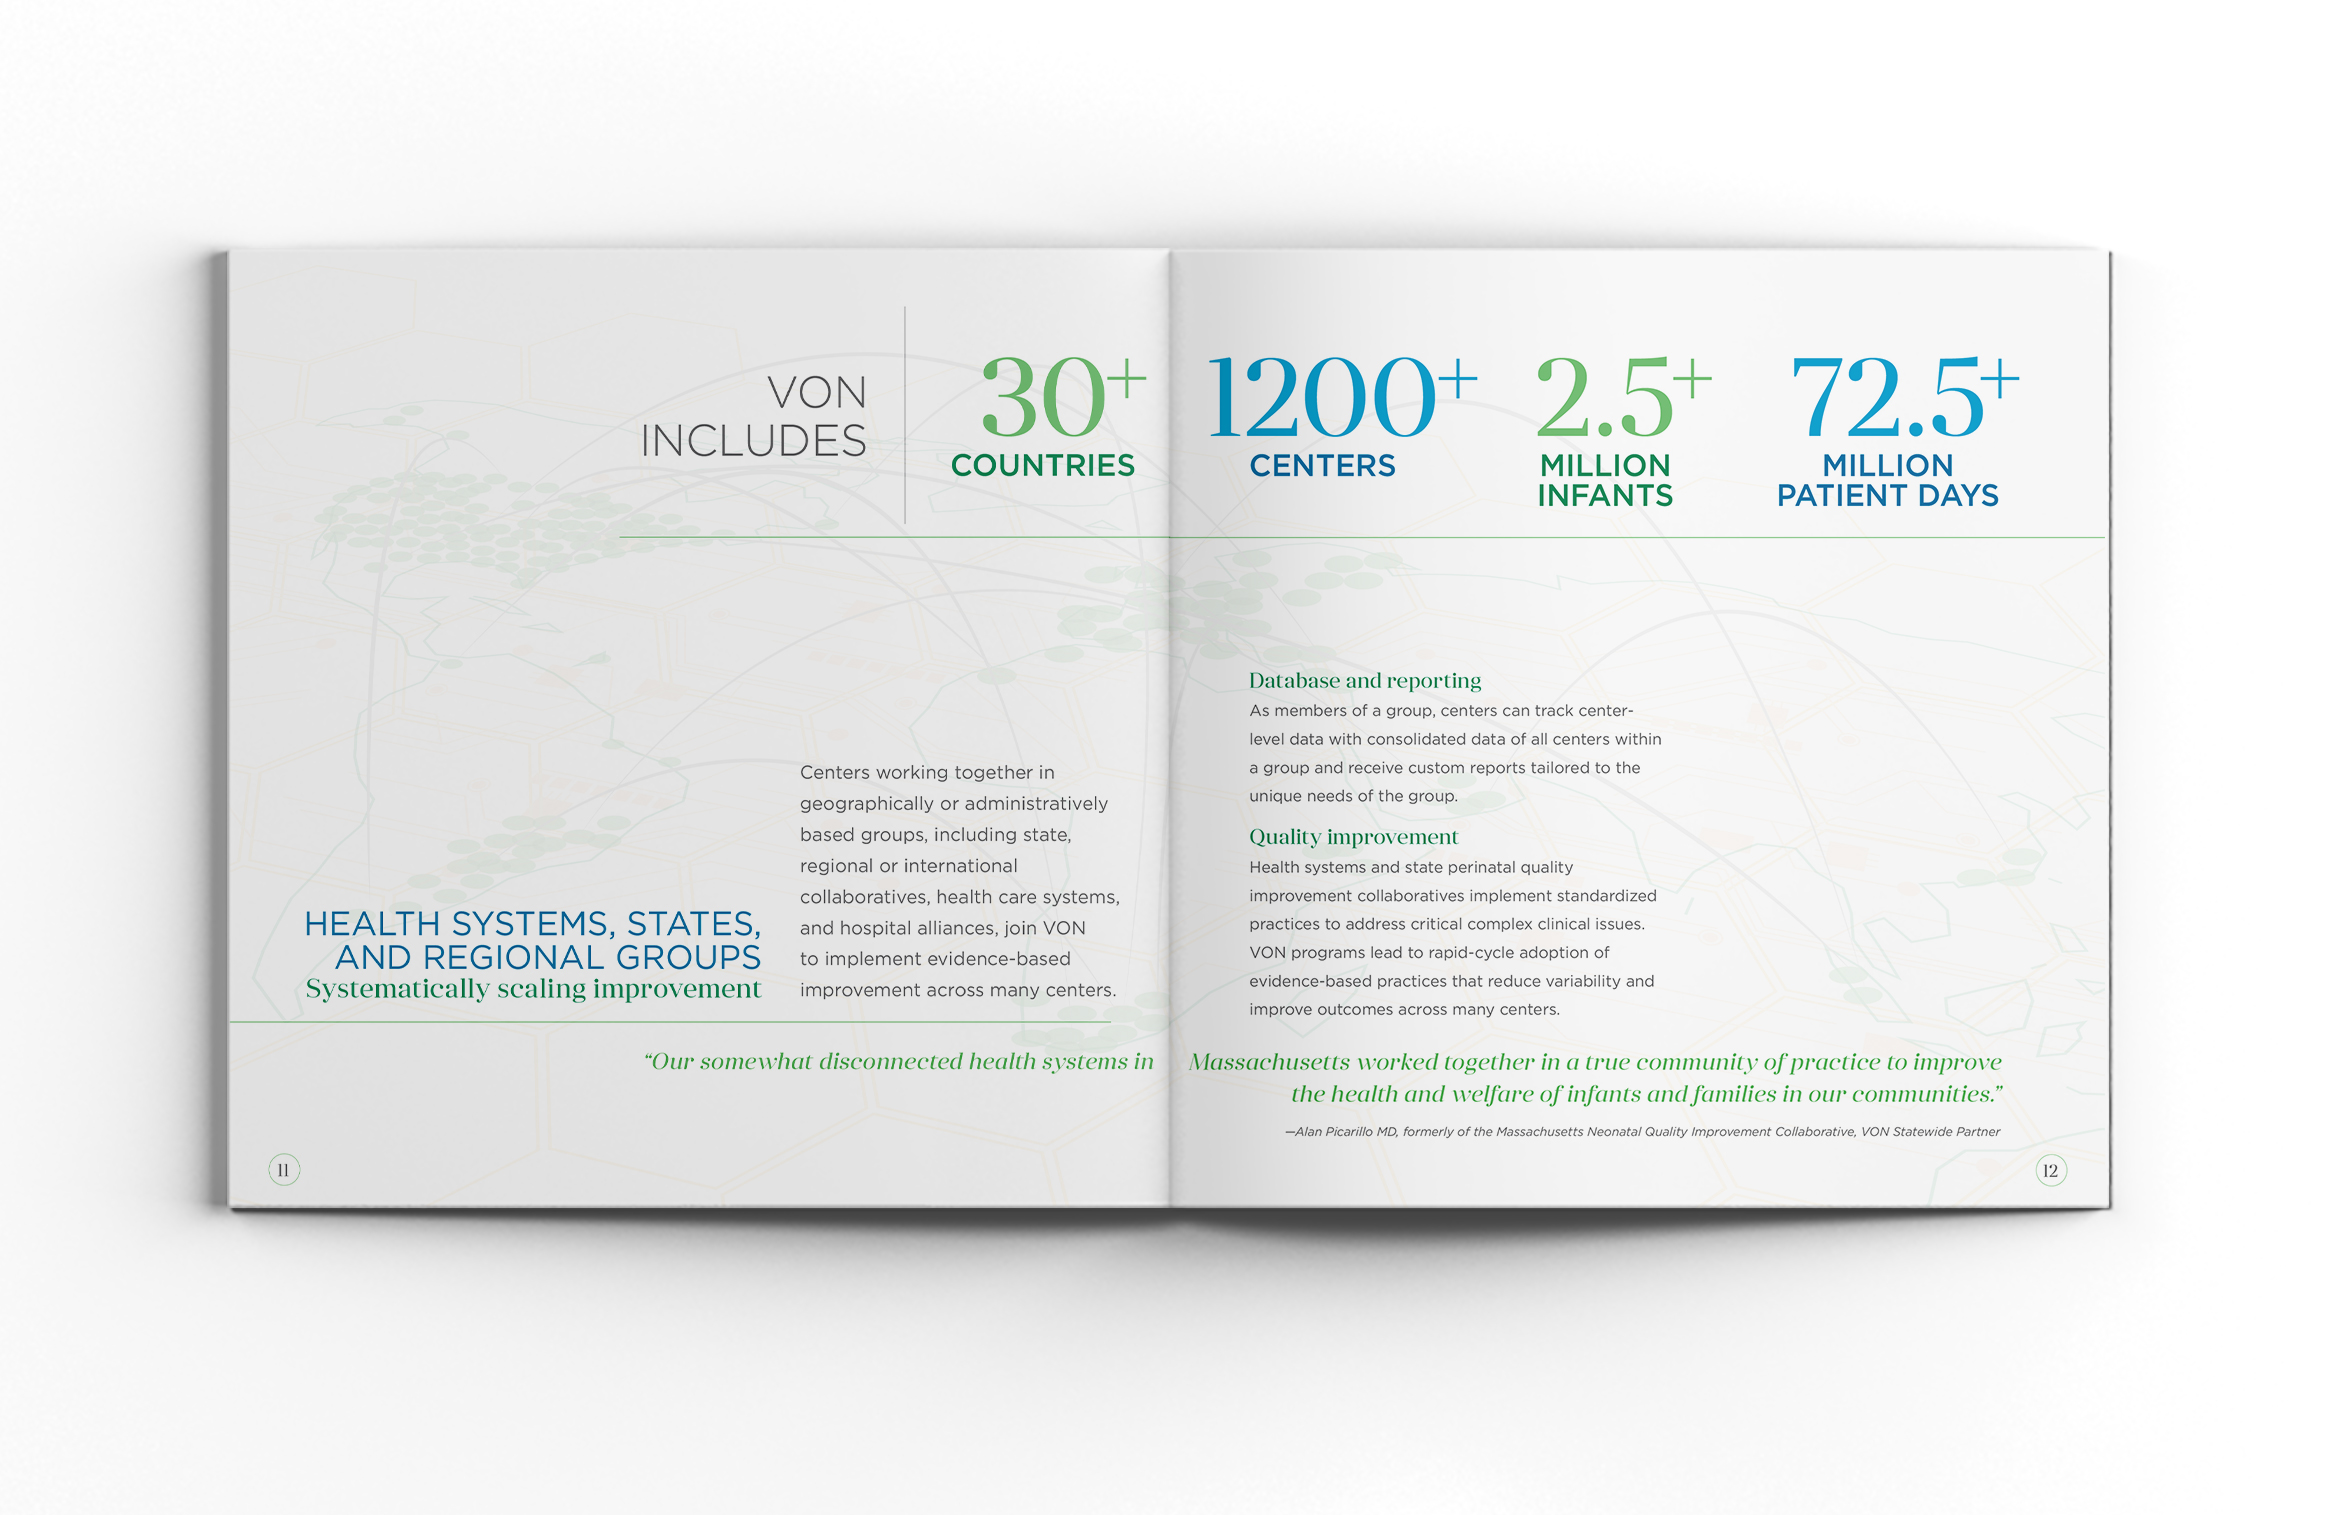 Capabilities brochure design for Vermont Oxford network